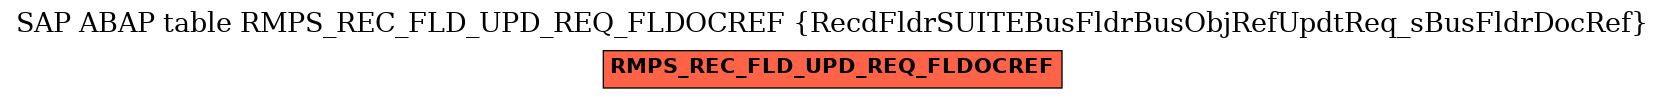 E-R Diagram for table RMPS_REC_FLD_UPD_REQ_FLDOCREF (RecdFldrSUITEBusFldrBusObjRefUpdtReq_sBusFldrDocRef)